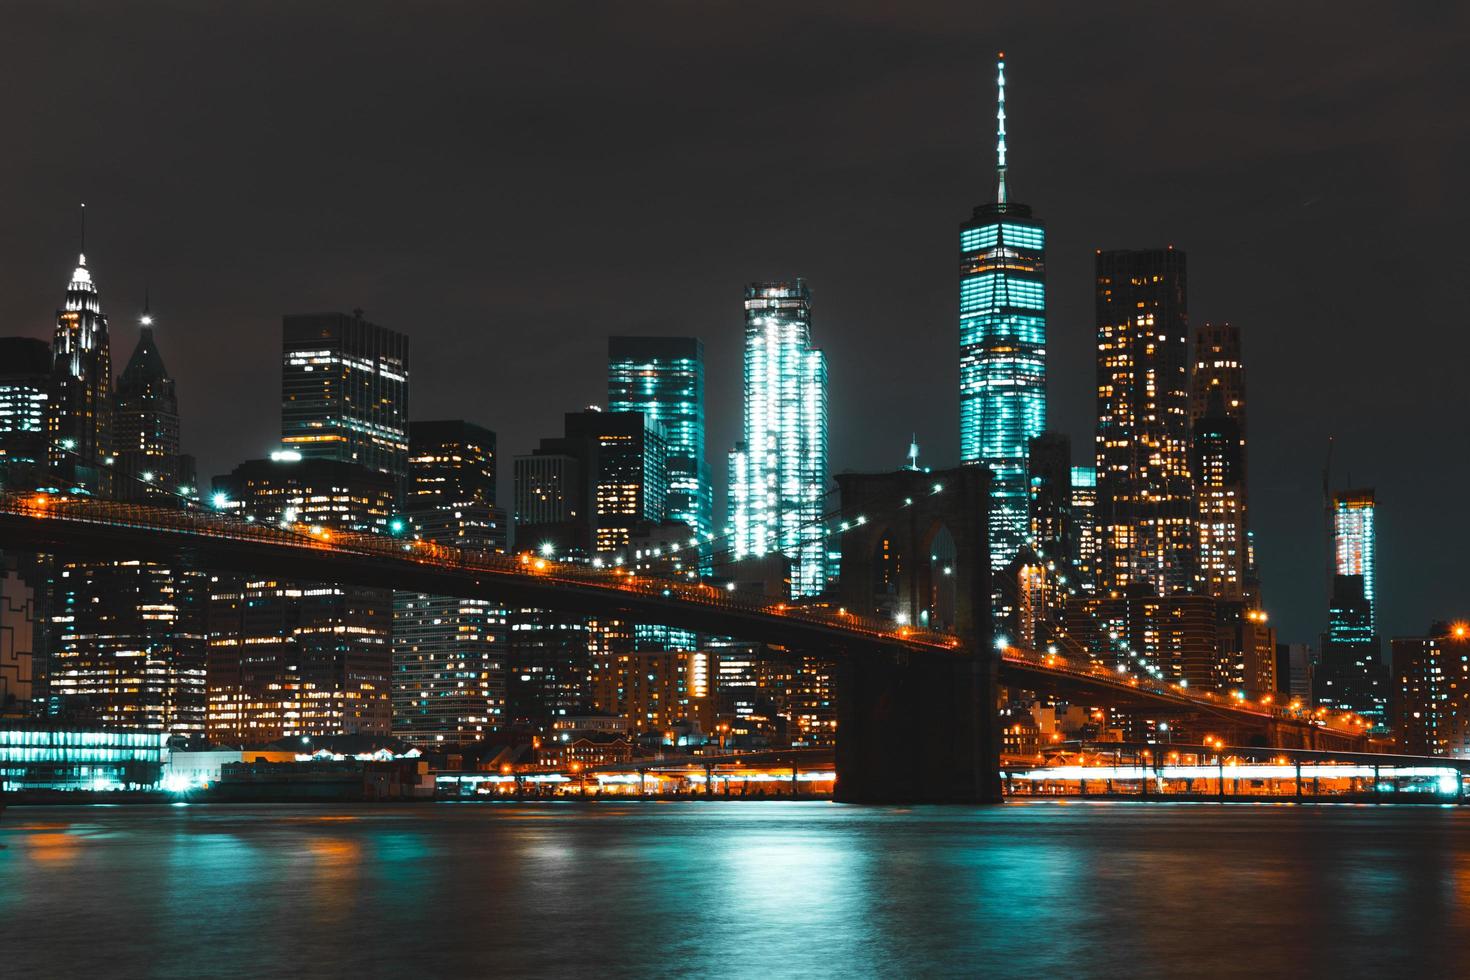 The Brooklyn Bridge at nighttime photo